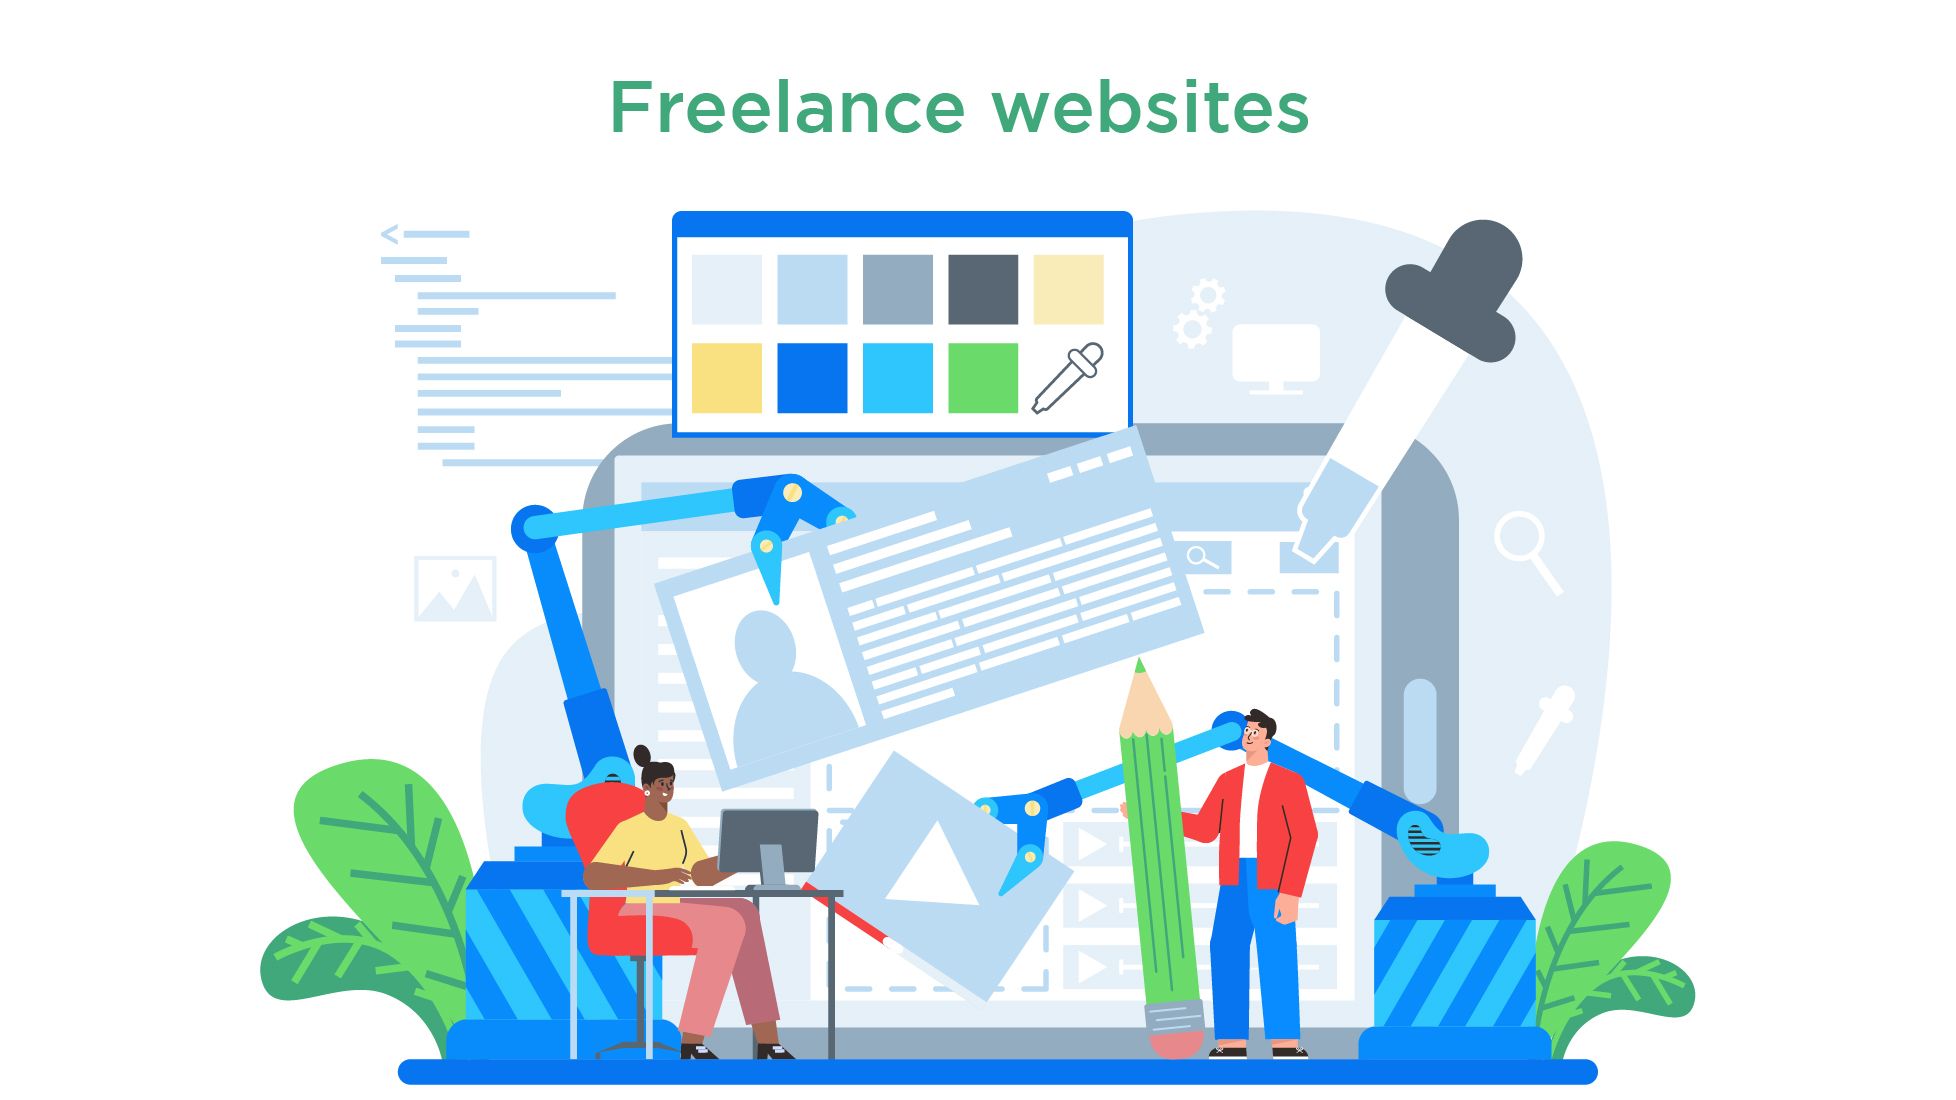 Freelance websites